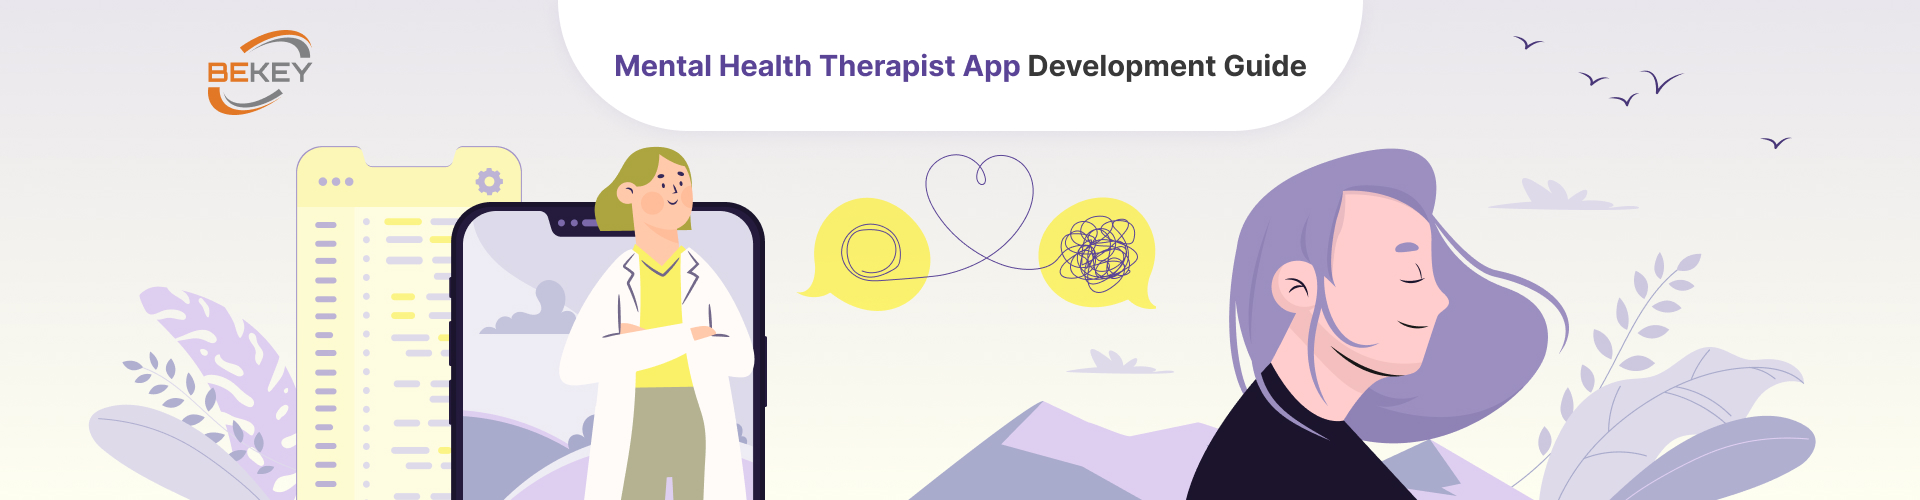 Mental Health Therapist App Development Guide - image